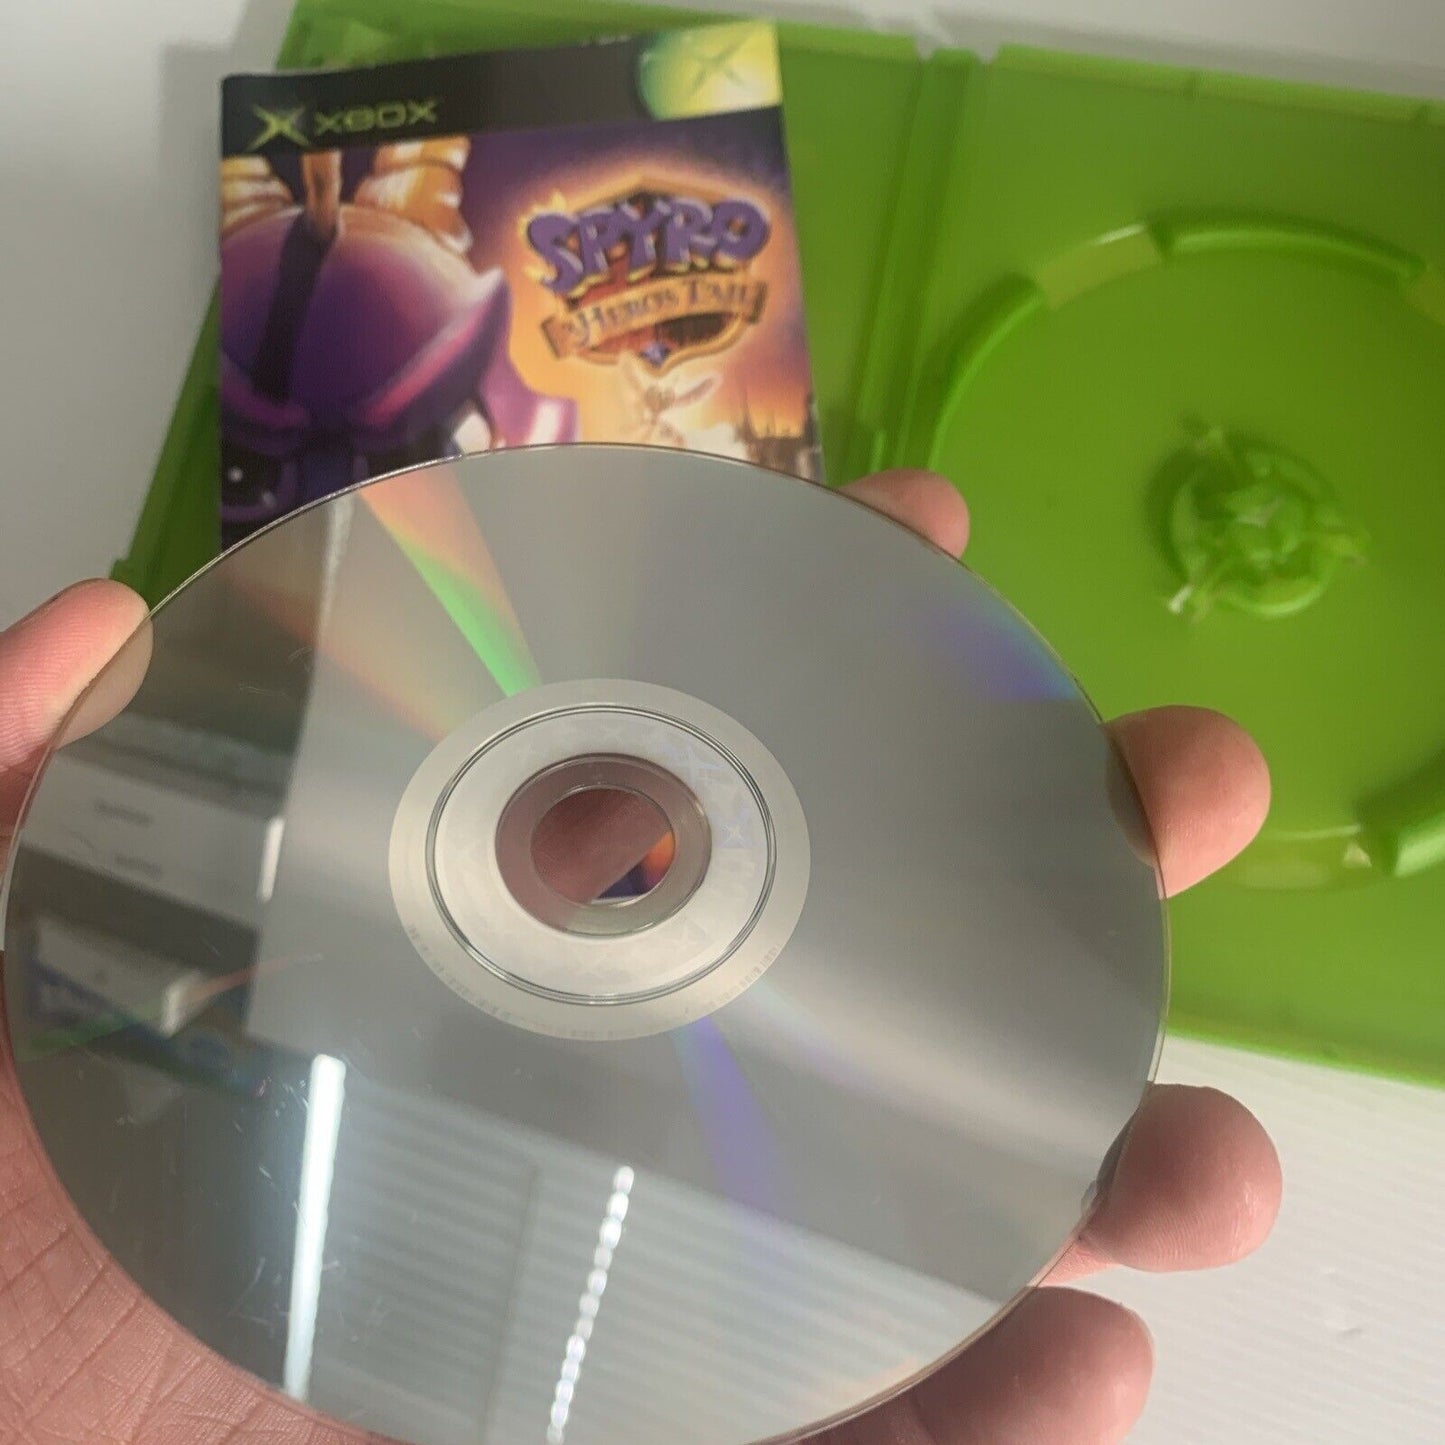 Spyro A Hero’s Tail Xbox Original Game